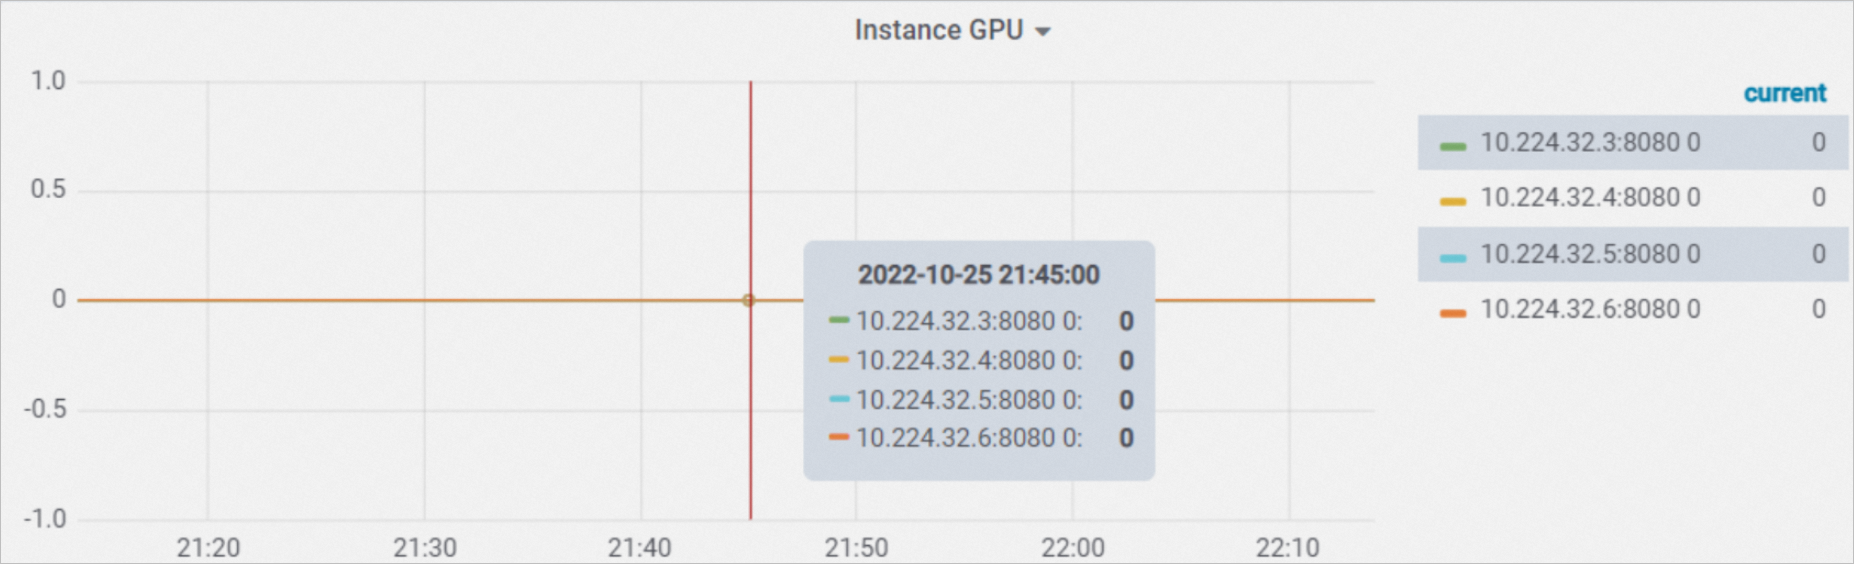 Instance GPU